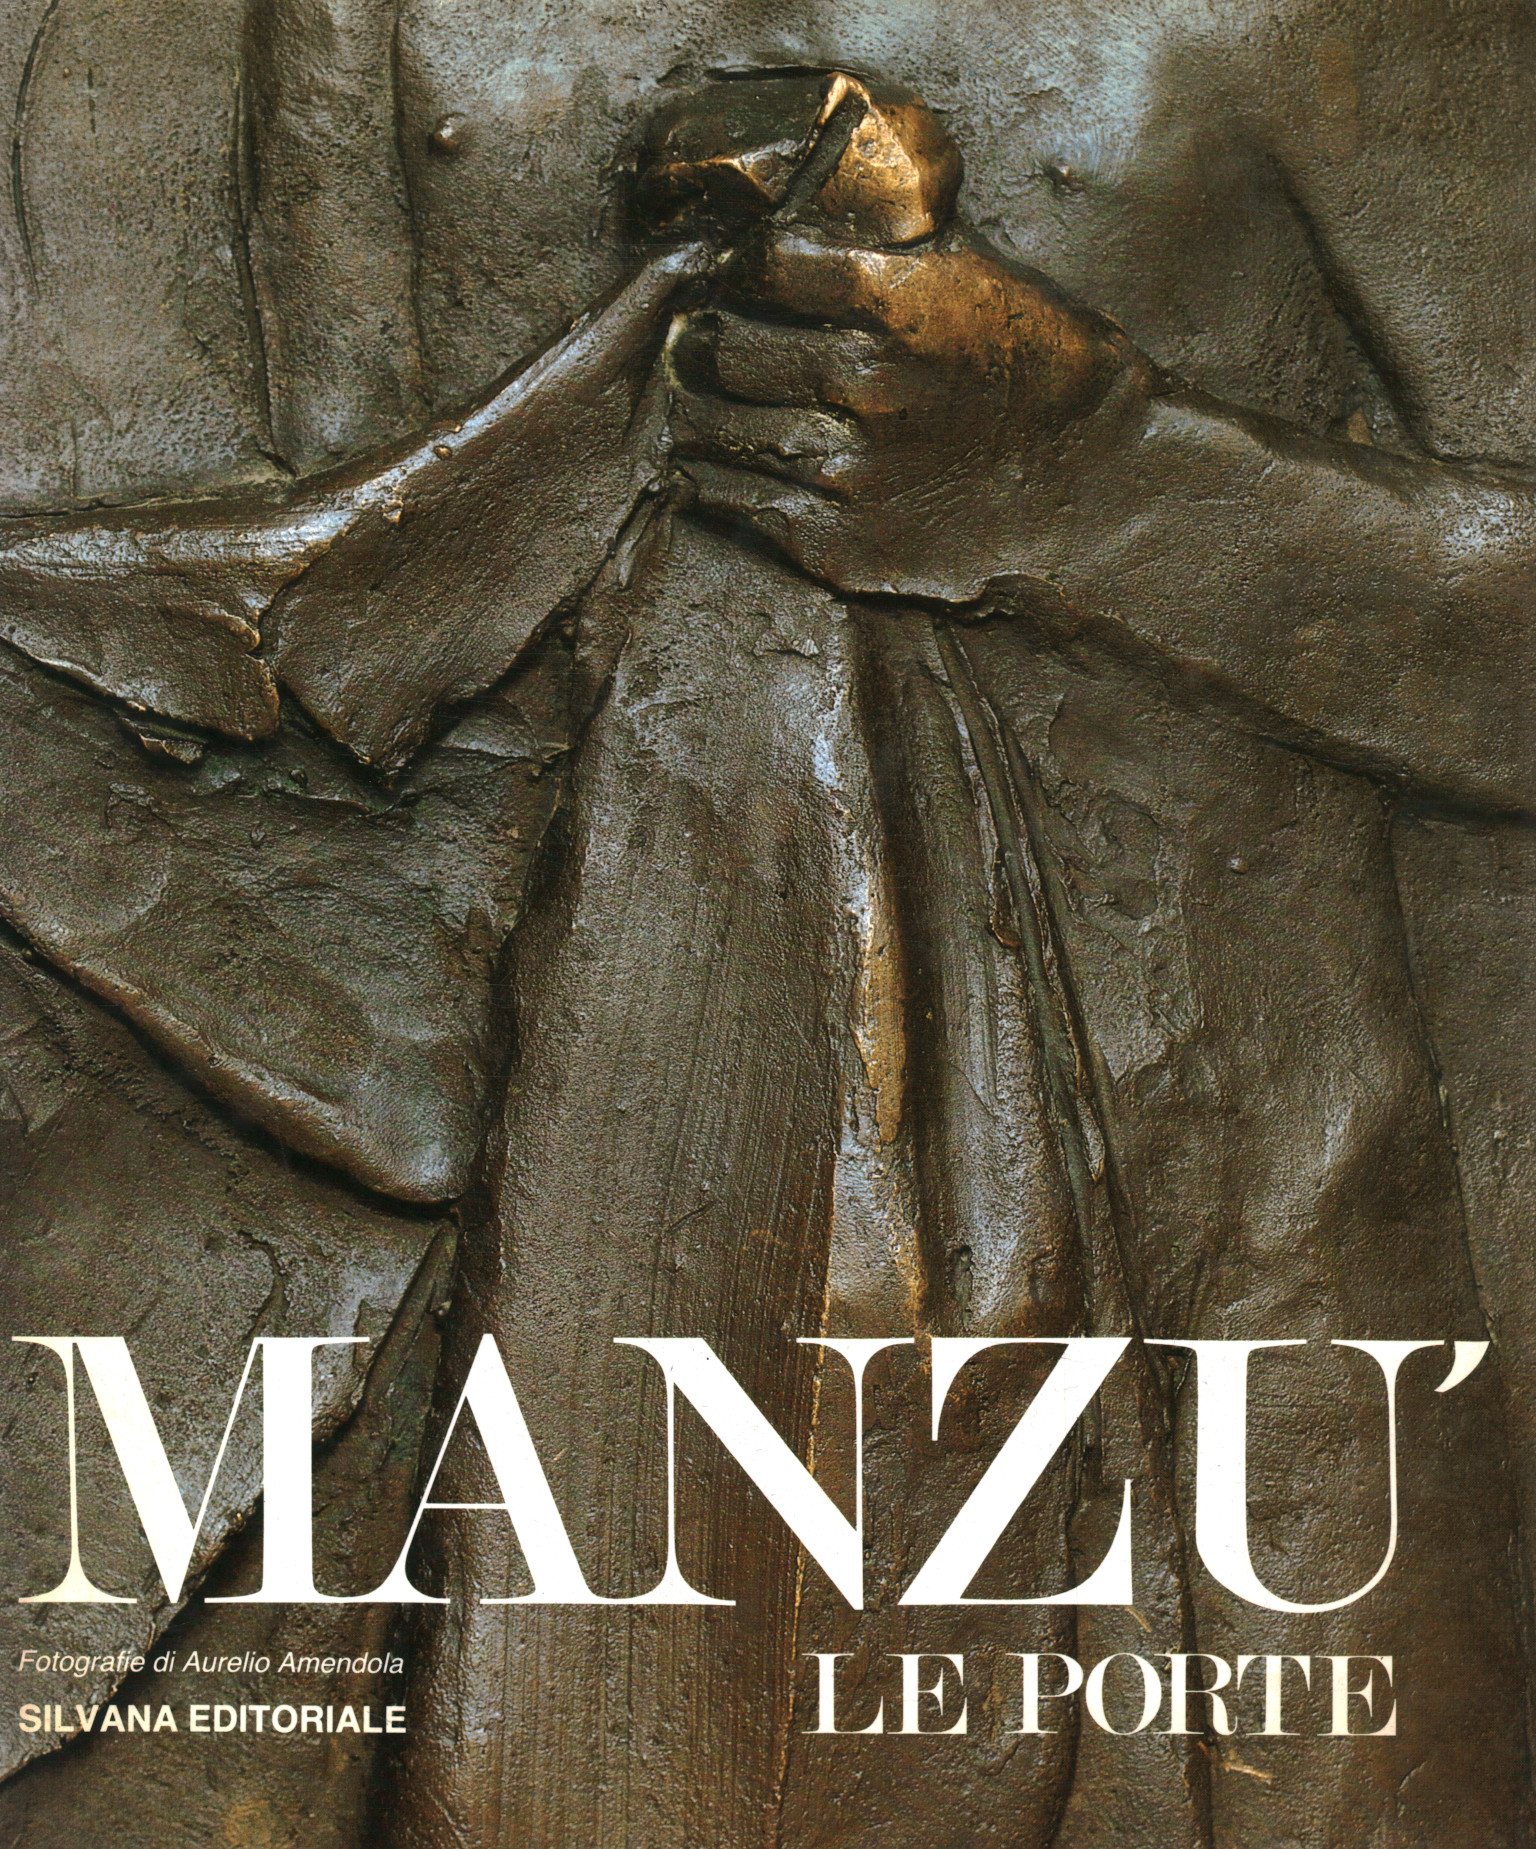 Manzu. The doors